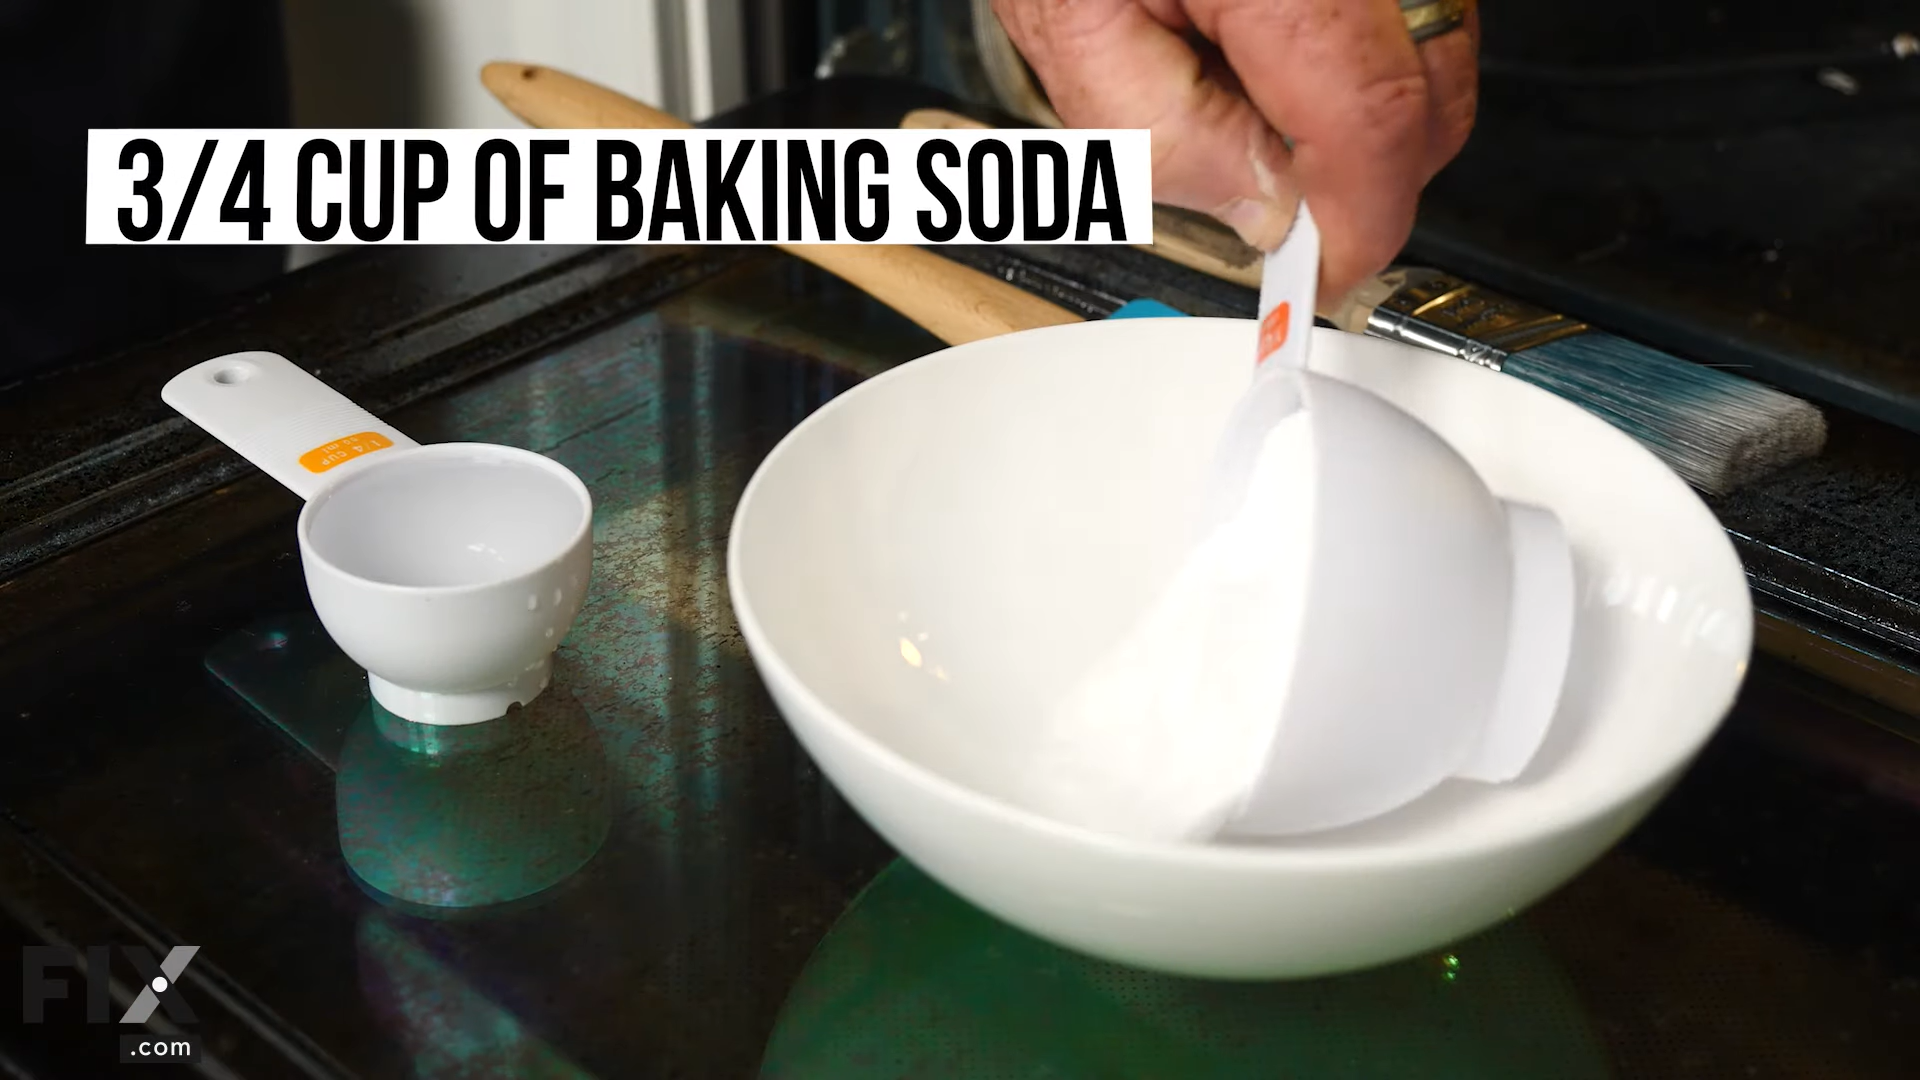 Homemade Cleaner Made from Baking Soda